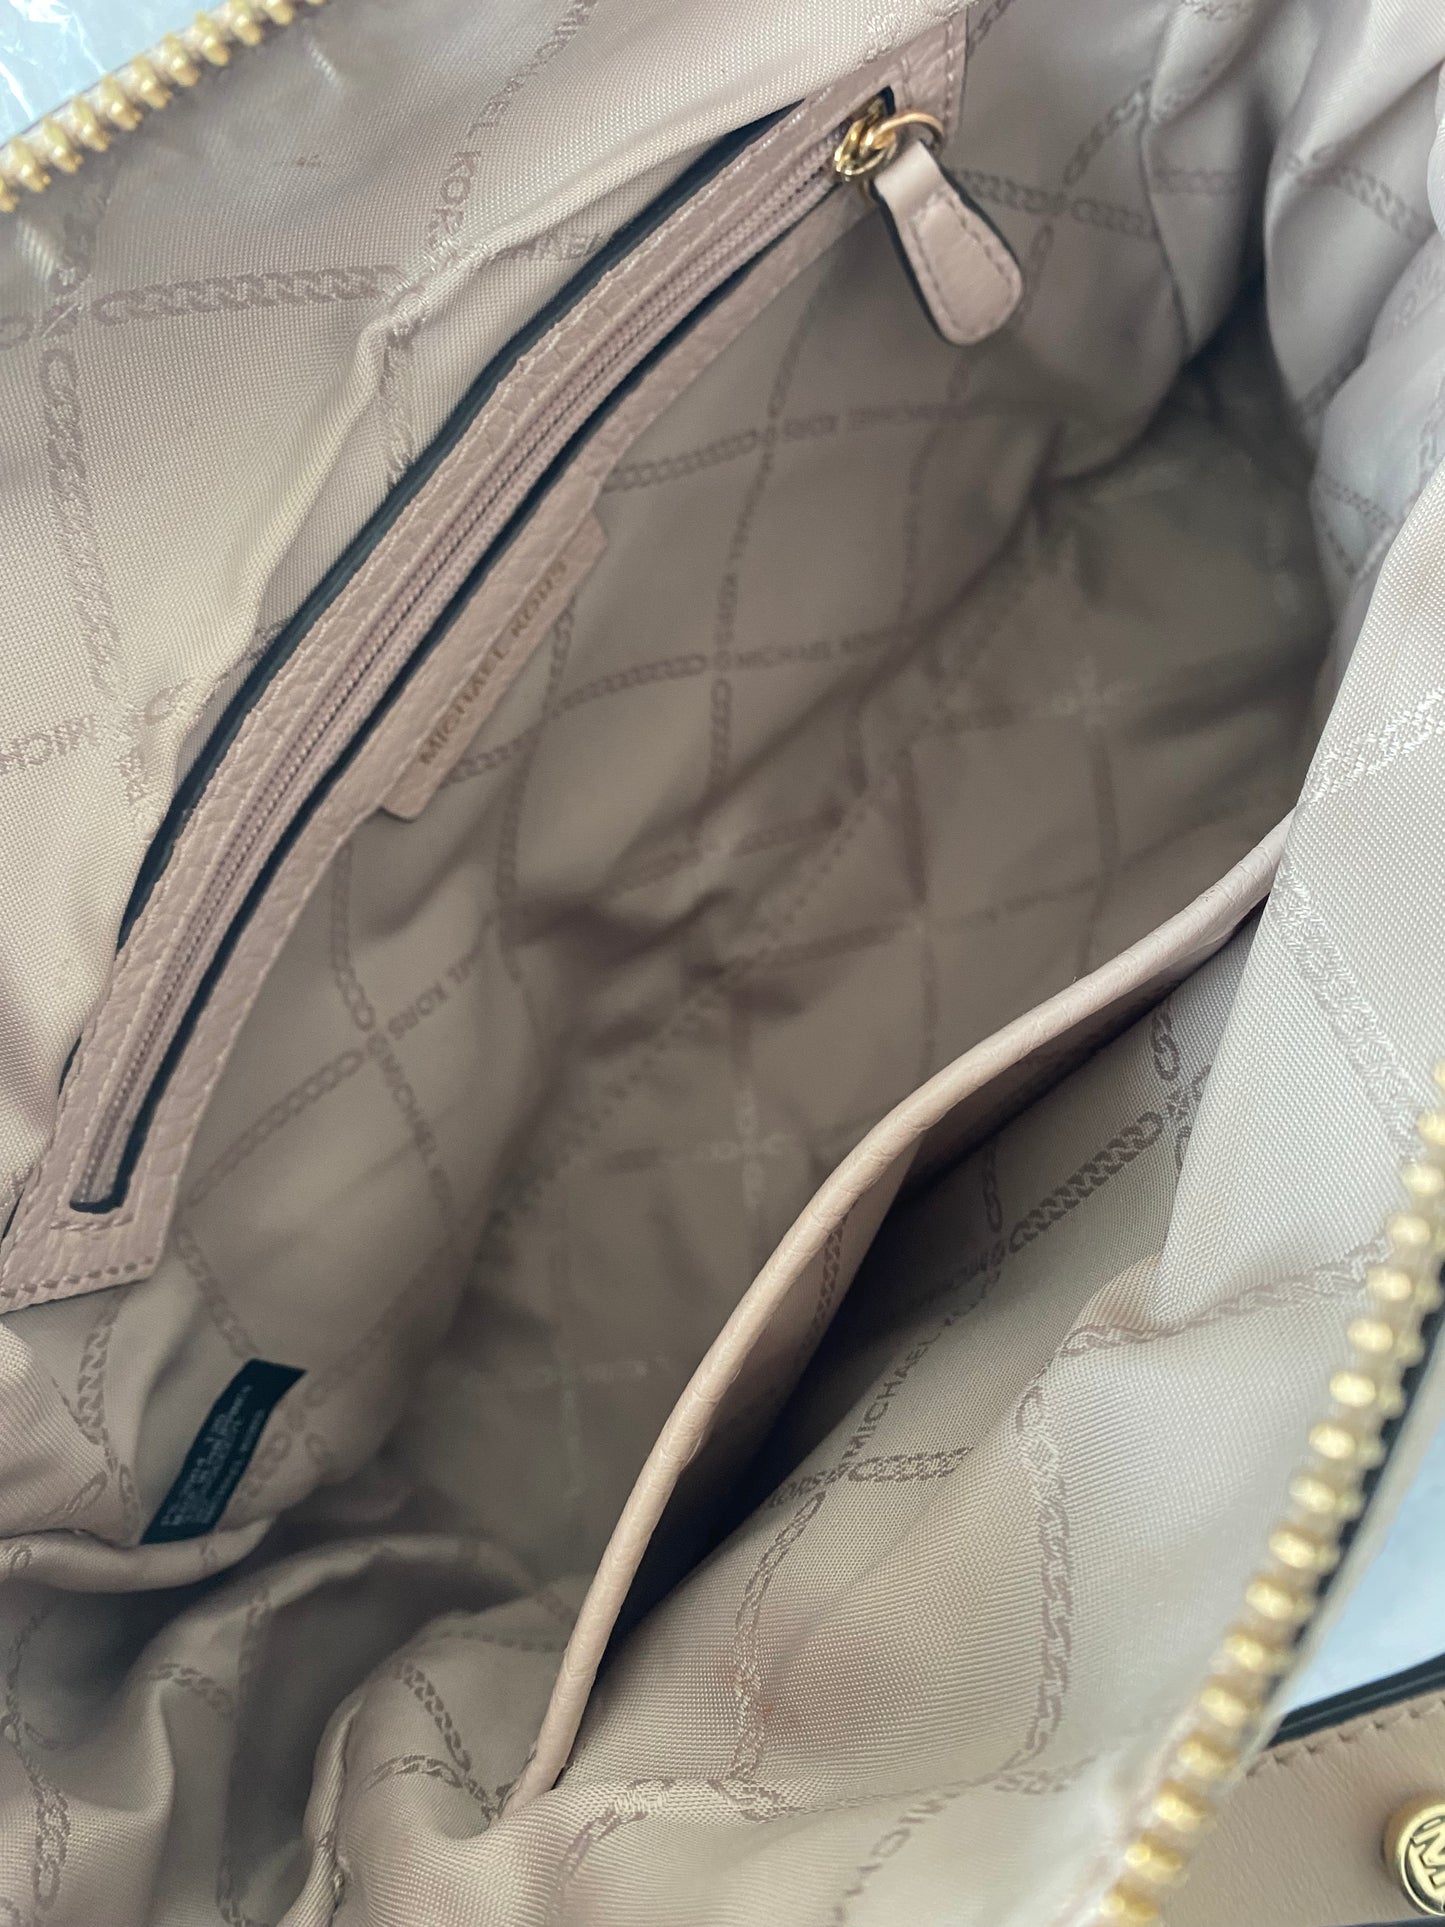 Michael Kors Blush Pink Leather Crossbody Bag